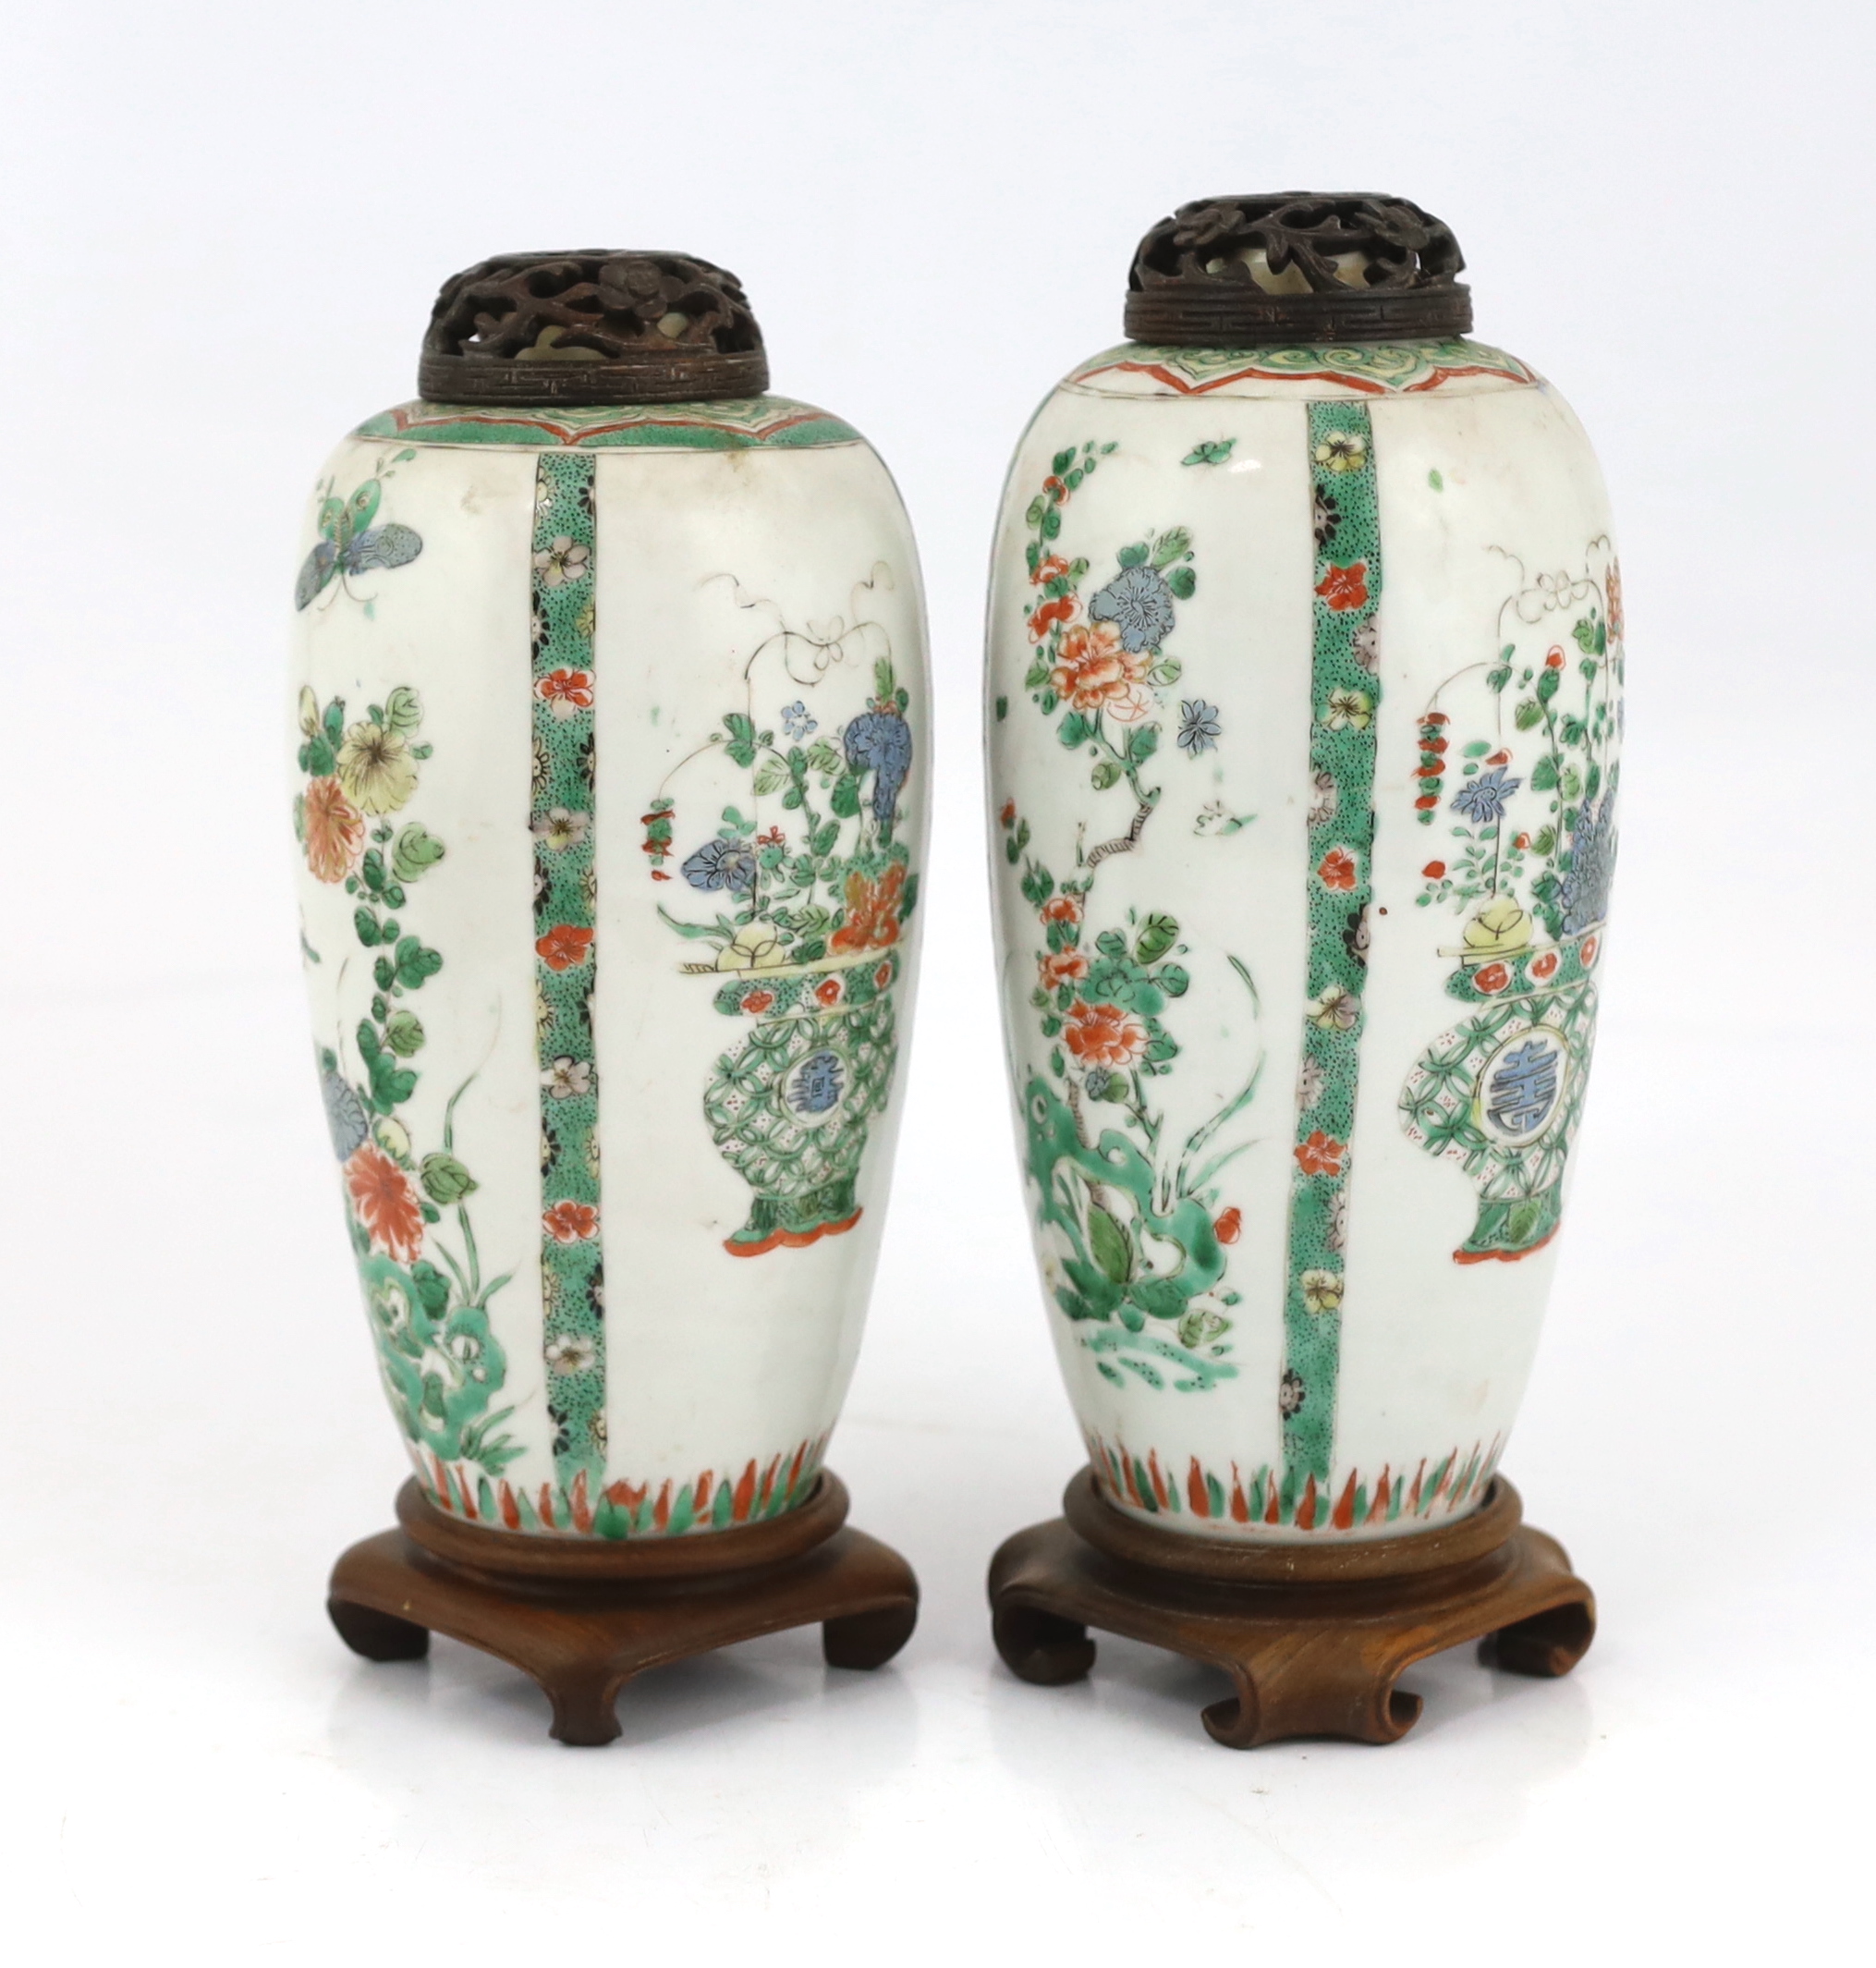 A near pair of Chinese famille verte jars, Kangxi period, on wood plinths, blue enamels repainted